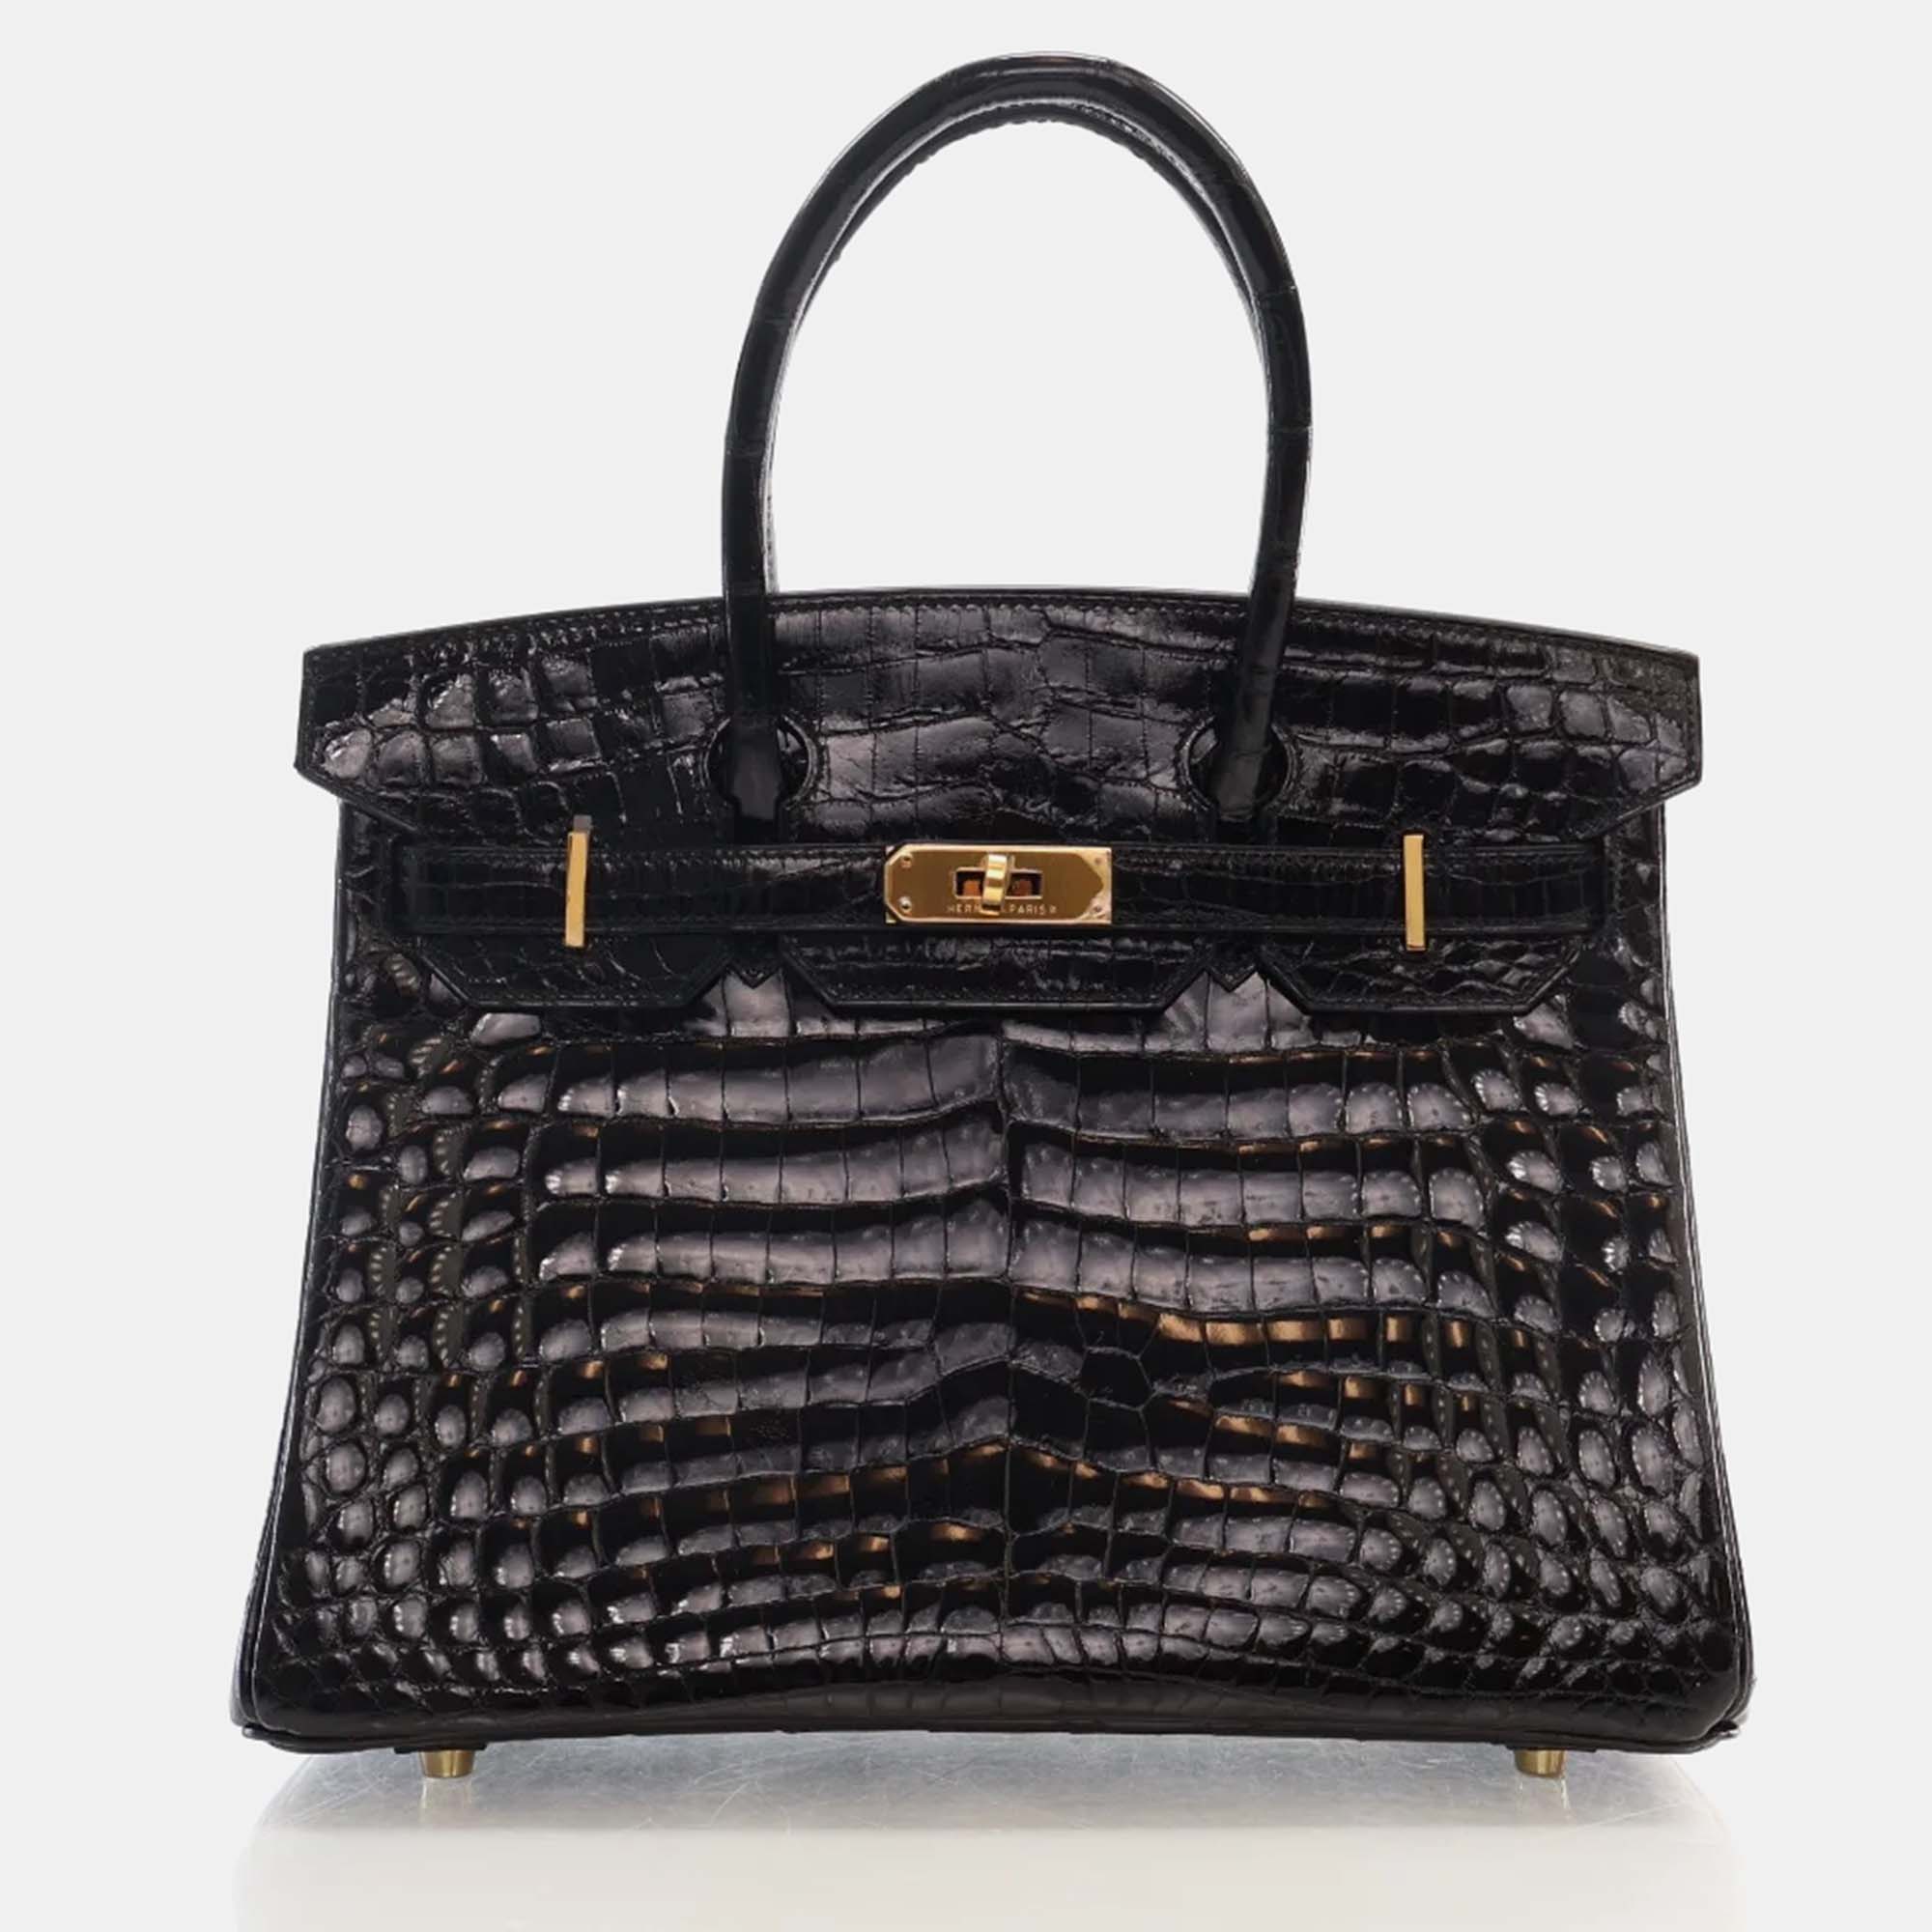 Hermes black alligator birkin 30 handbag